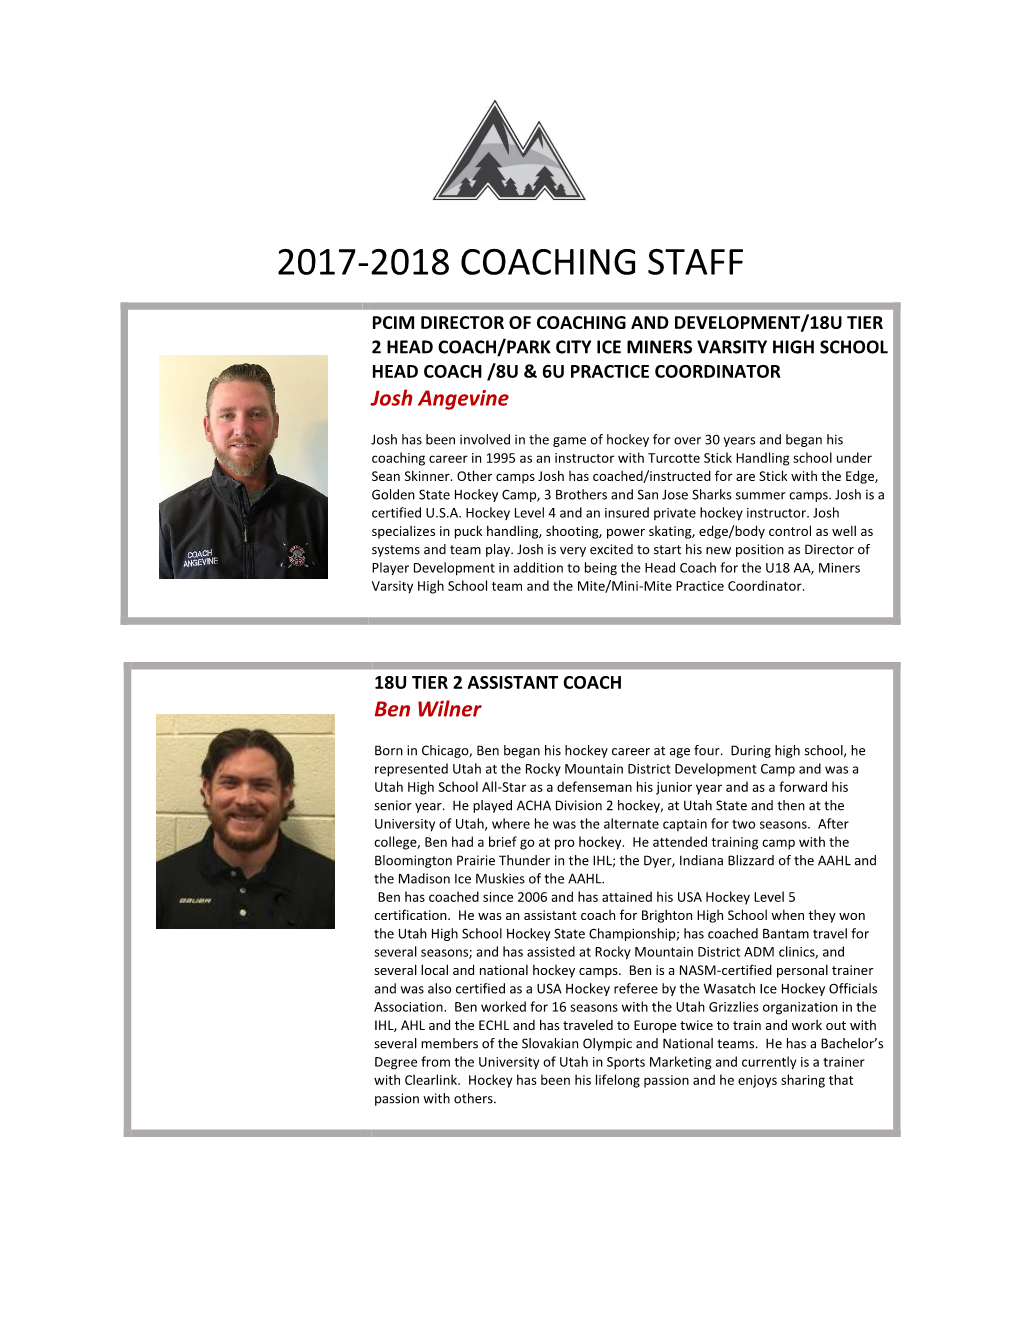 2017-2018 Coaching Staff